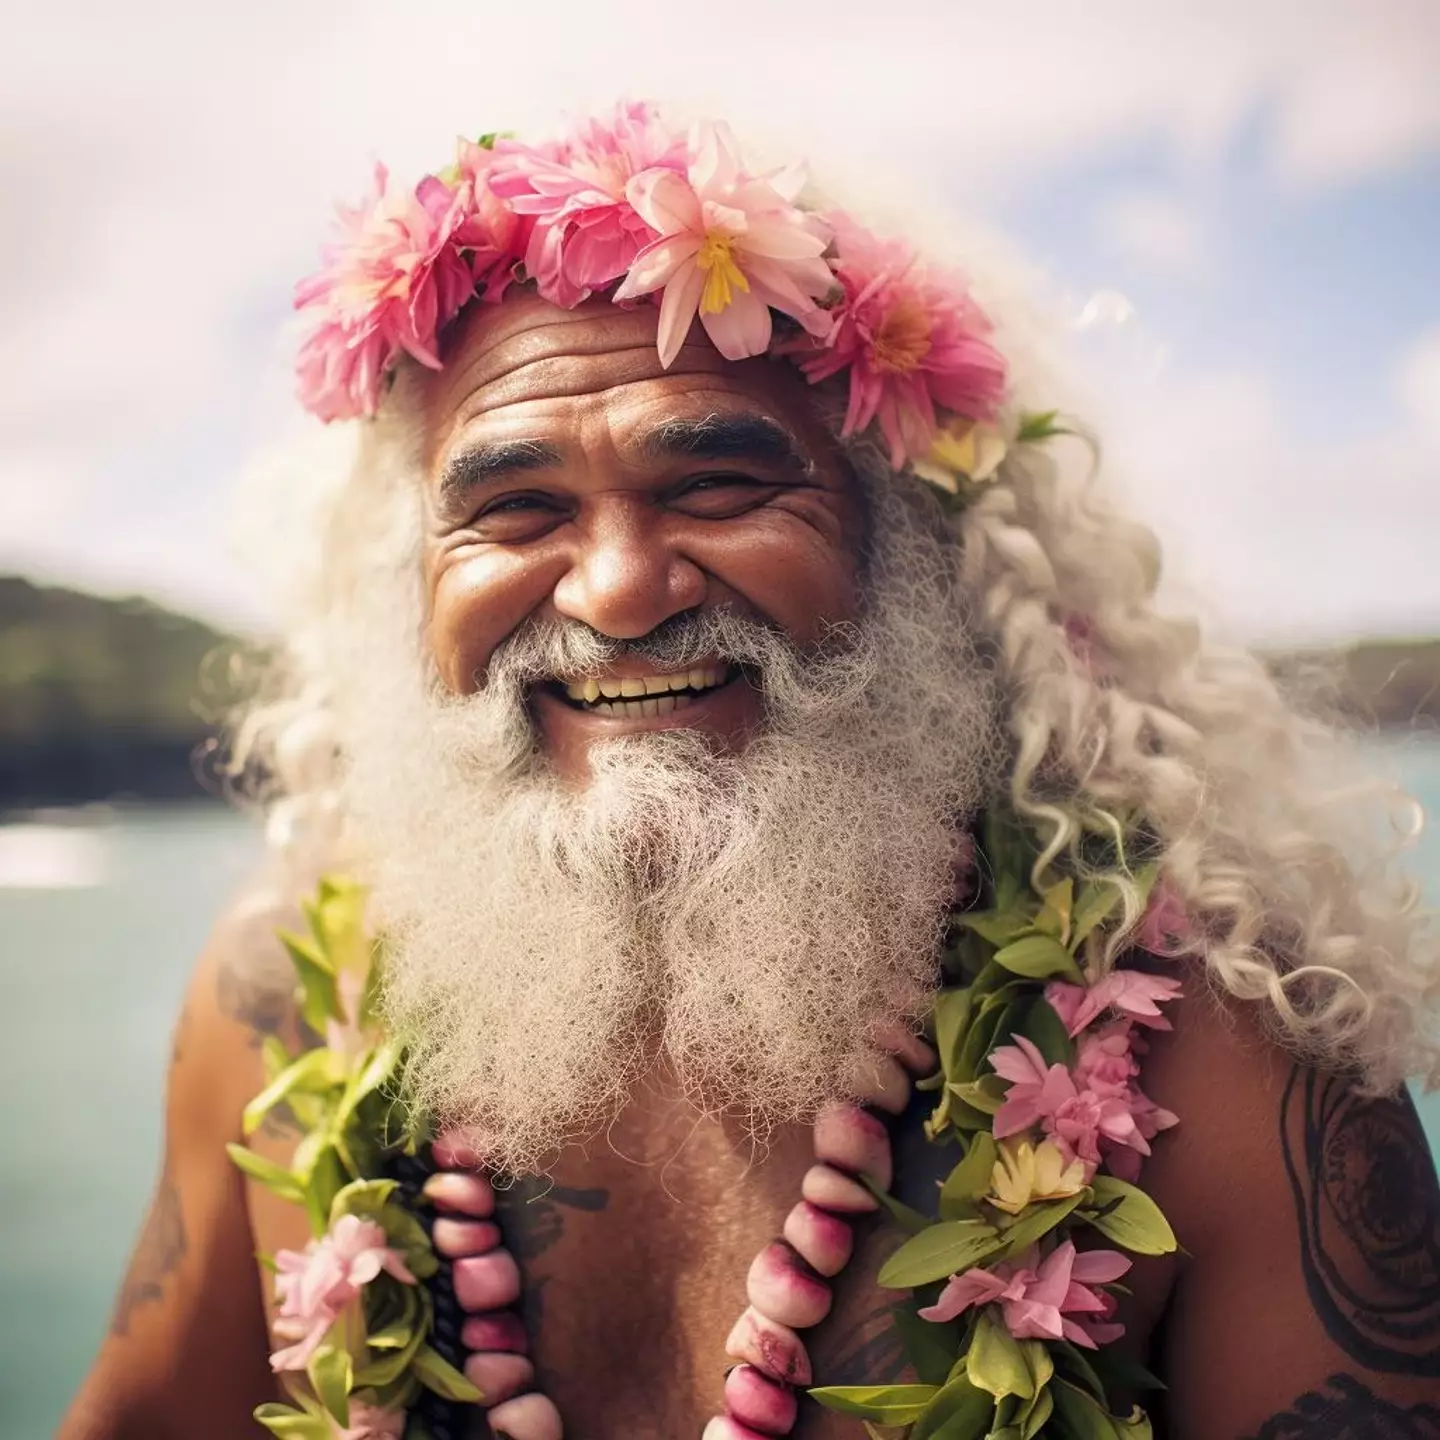 Mr Hawaii seems like a pretty chill dude.